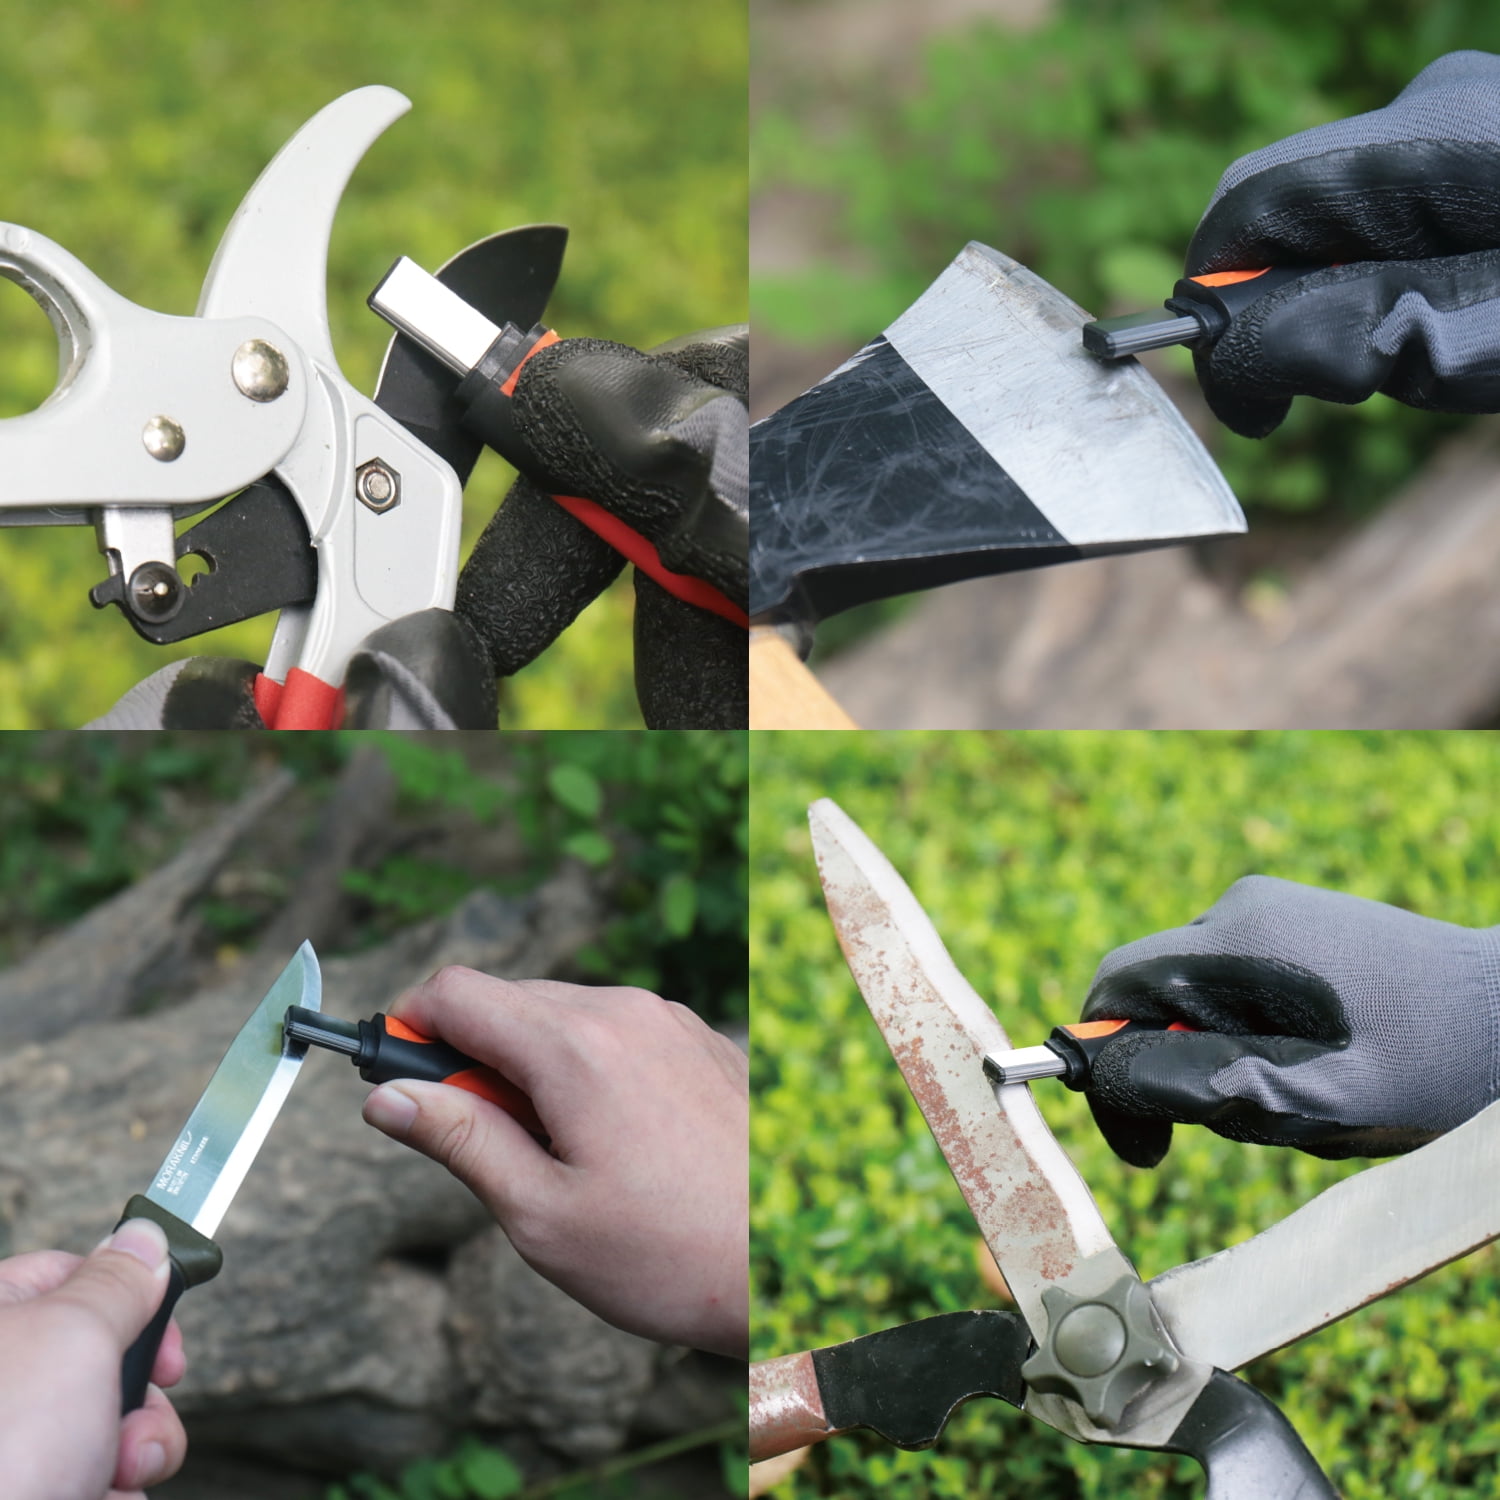 SHARPAL Pocket Knife Sharpener & Garden Tool Sharpener, Sharpening Straight  and Serrated Knives, Lawn Mower Blade, Axe, Pruners, Shears, Scissors